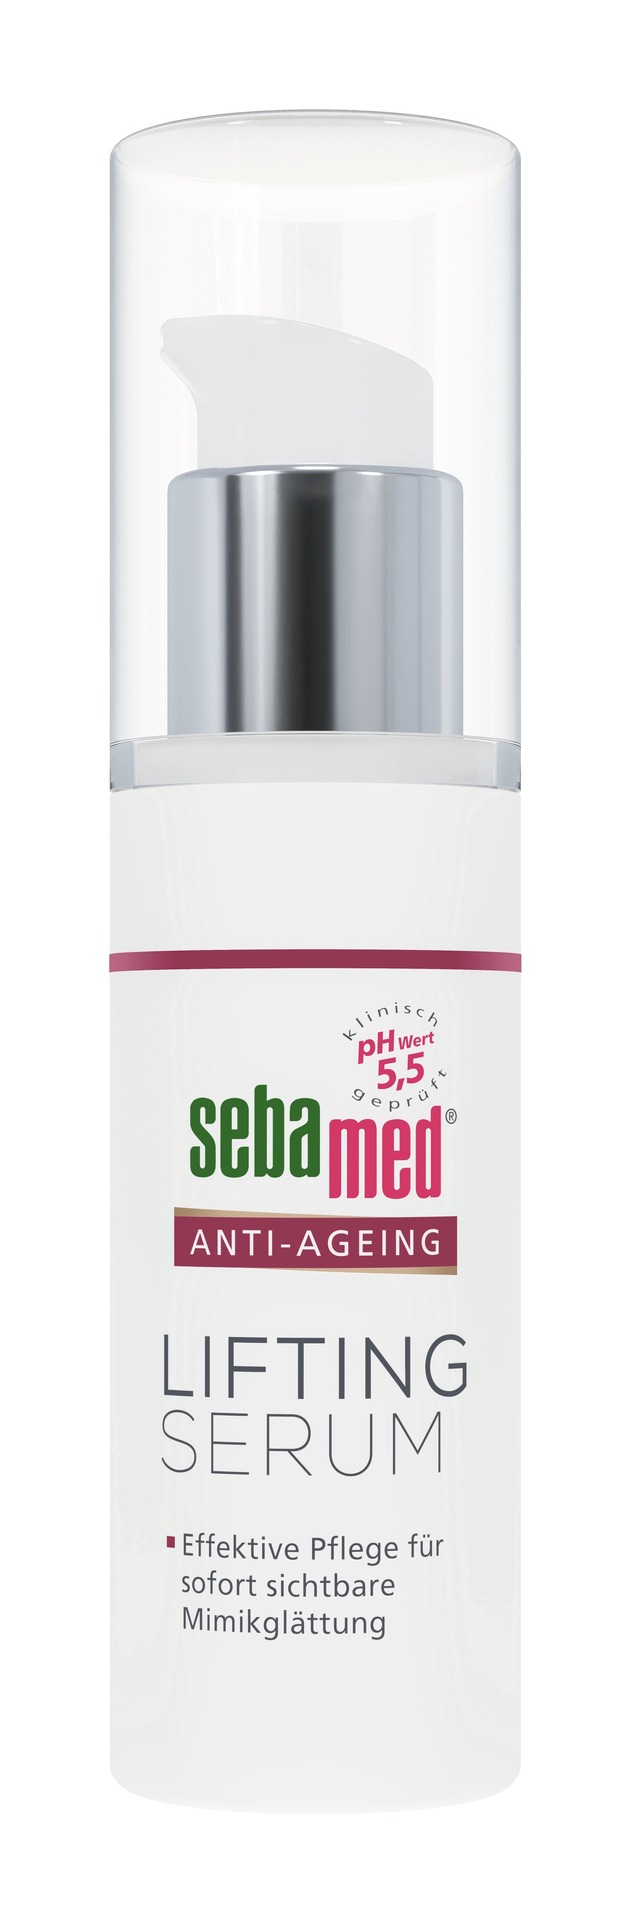 NEU: sebamed ANTI-AGEING Lifting Serum für sichtbar glattere Haut